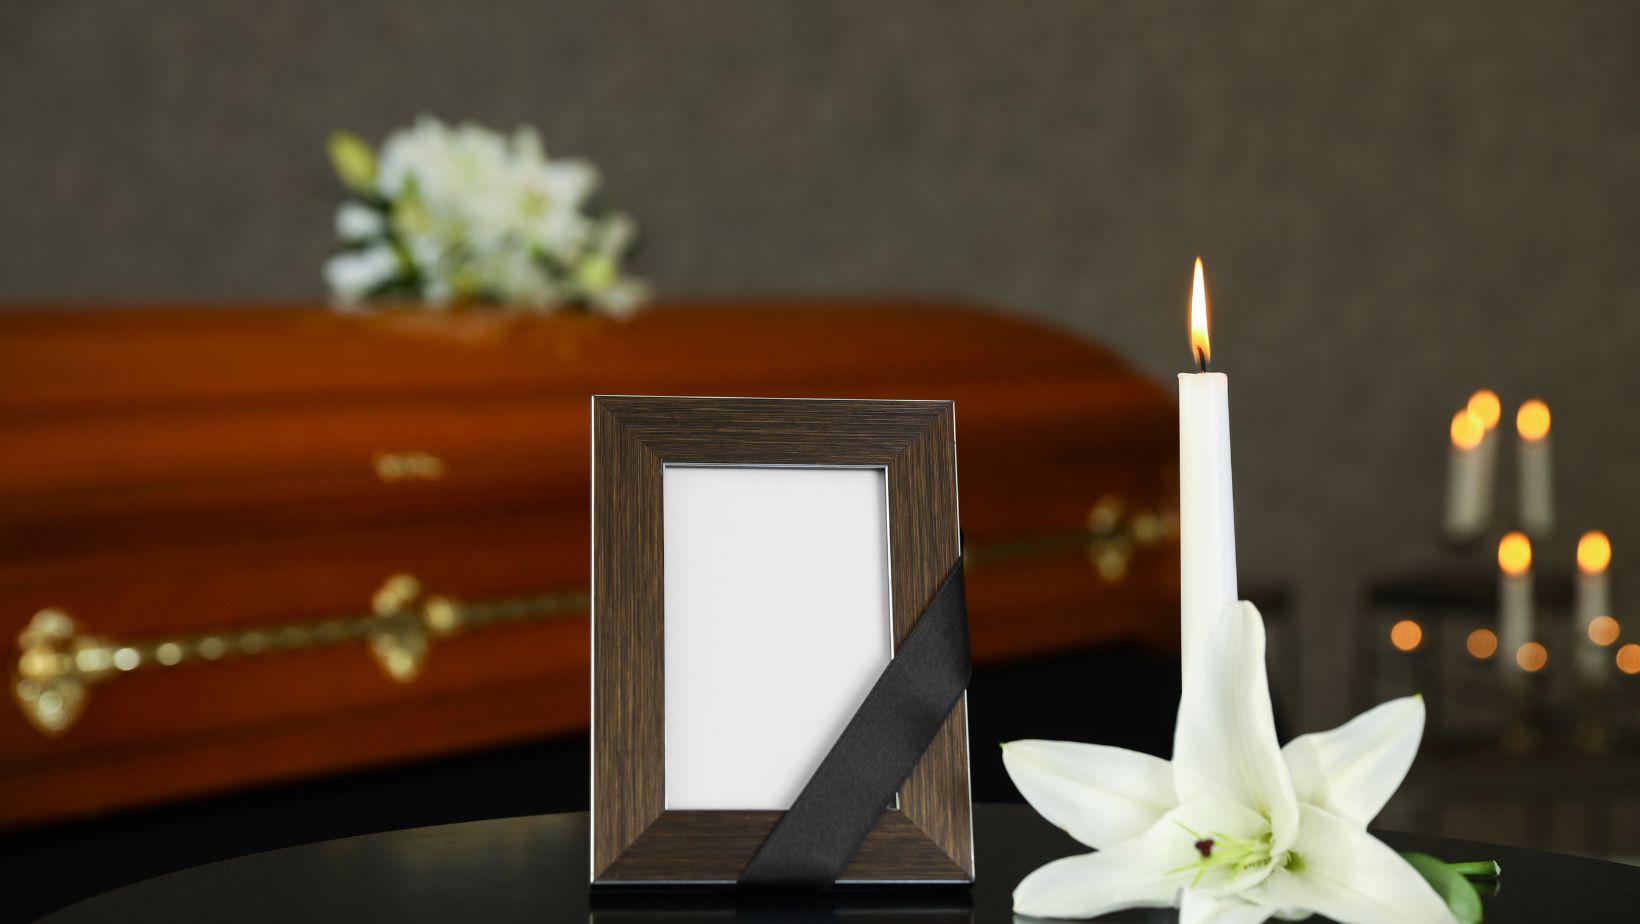 sytsema funeral homes obituaries